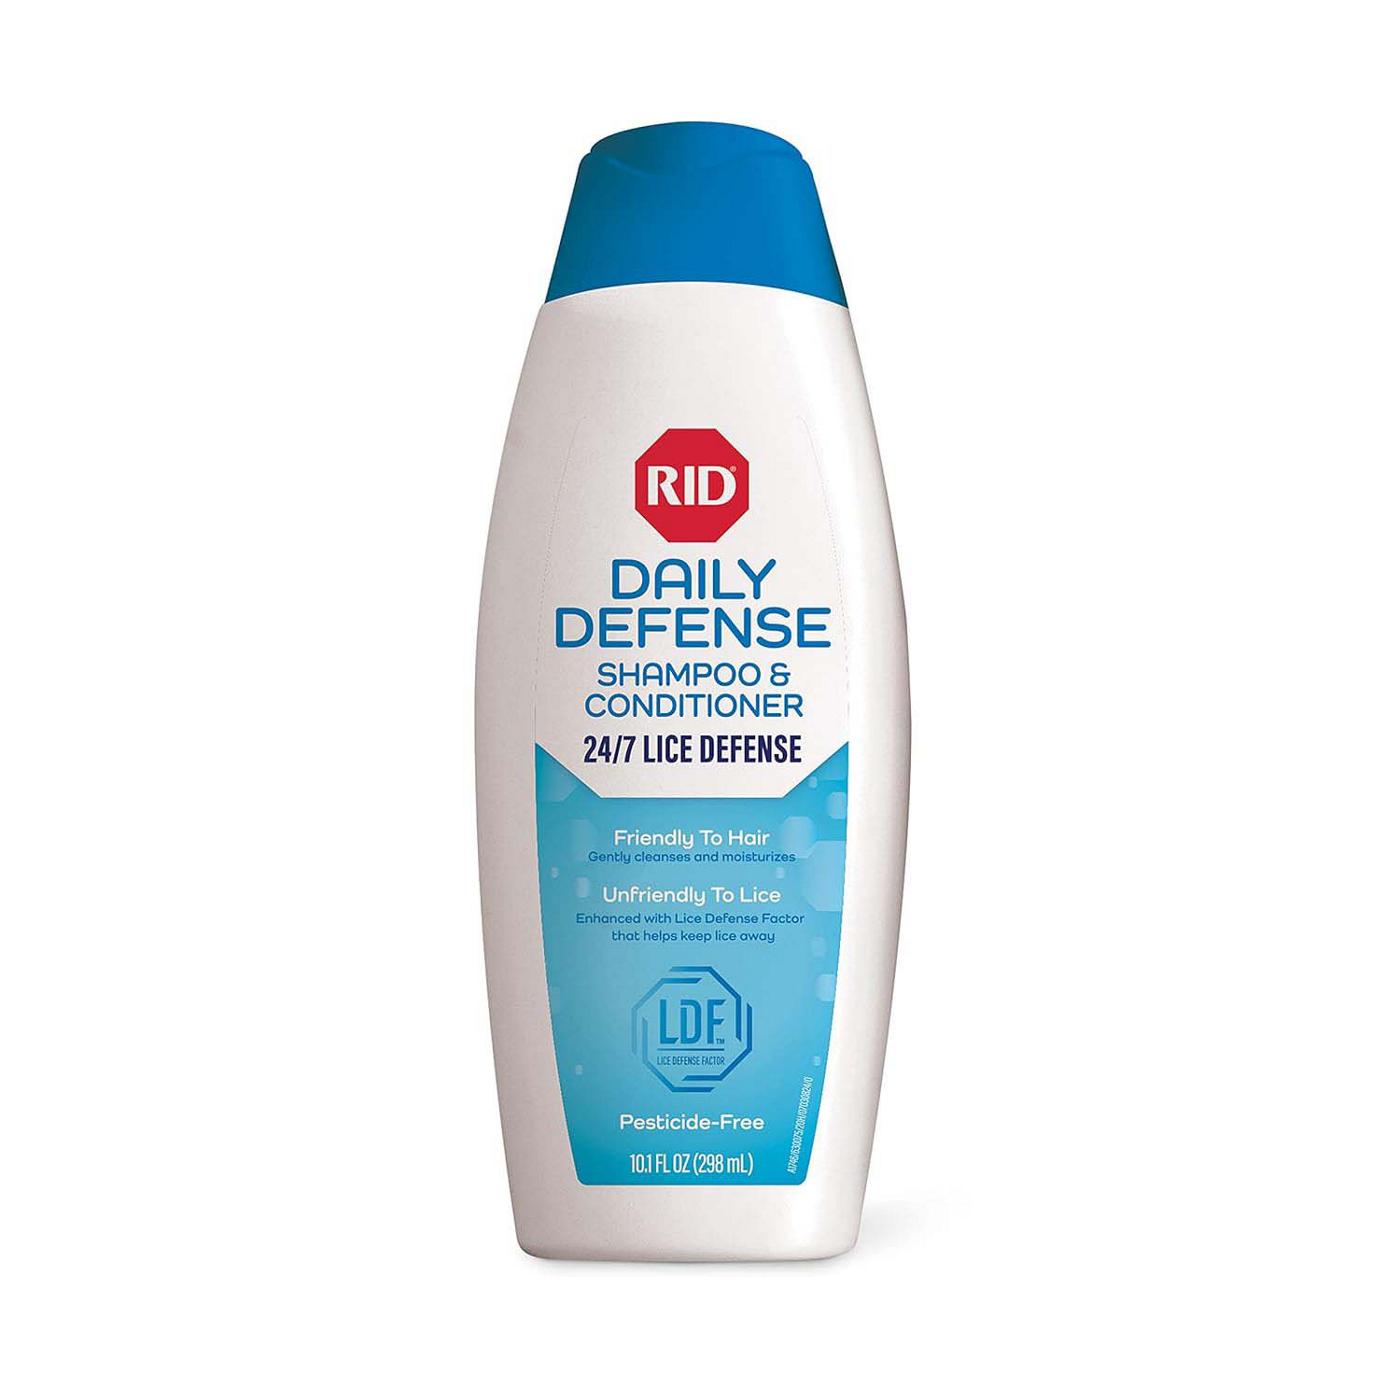 RID Daily Defense Shampoo & Conditioner; image 1 of 6